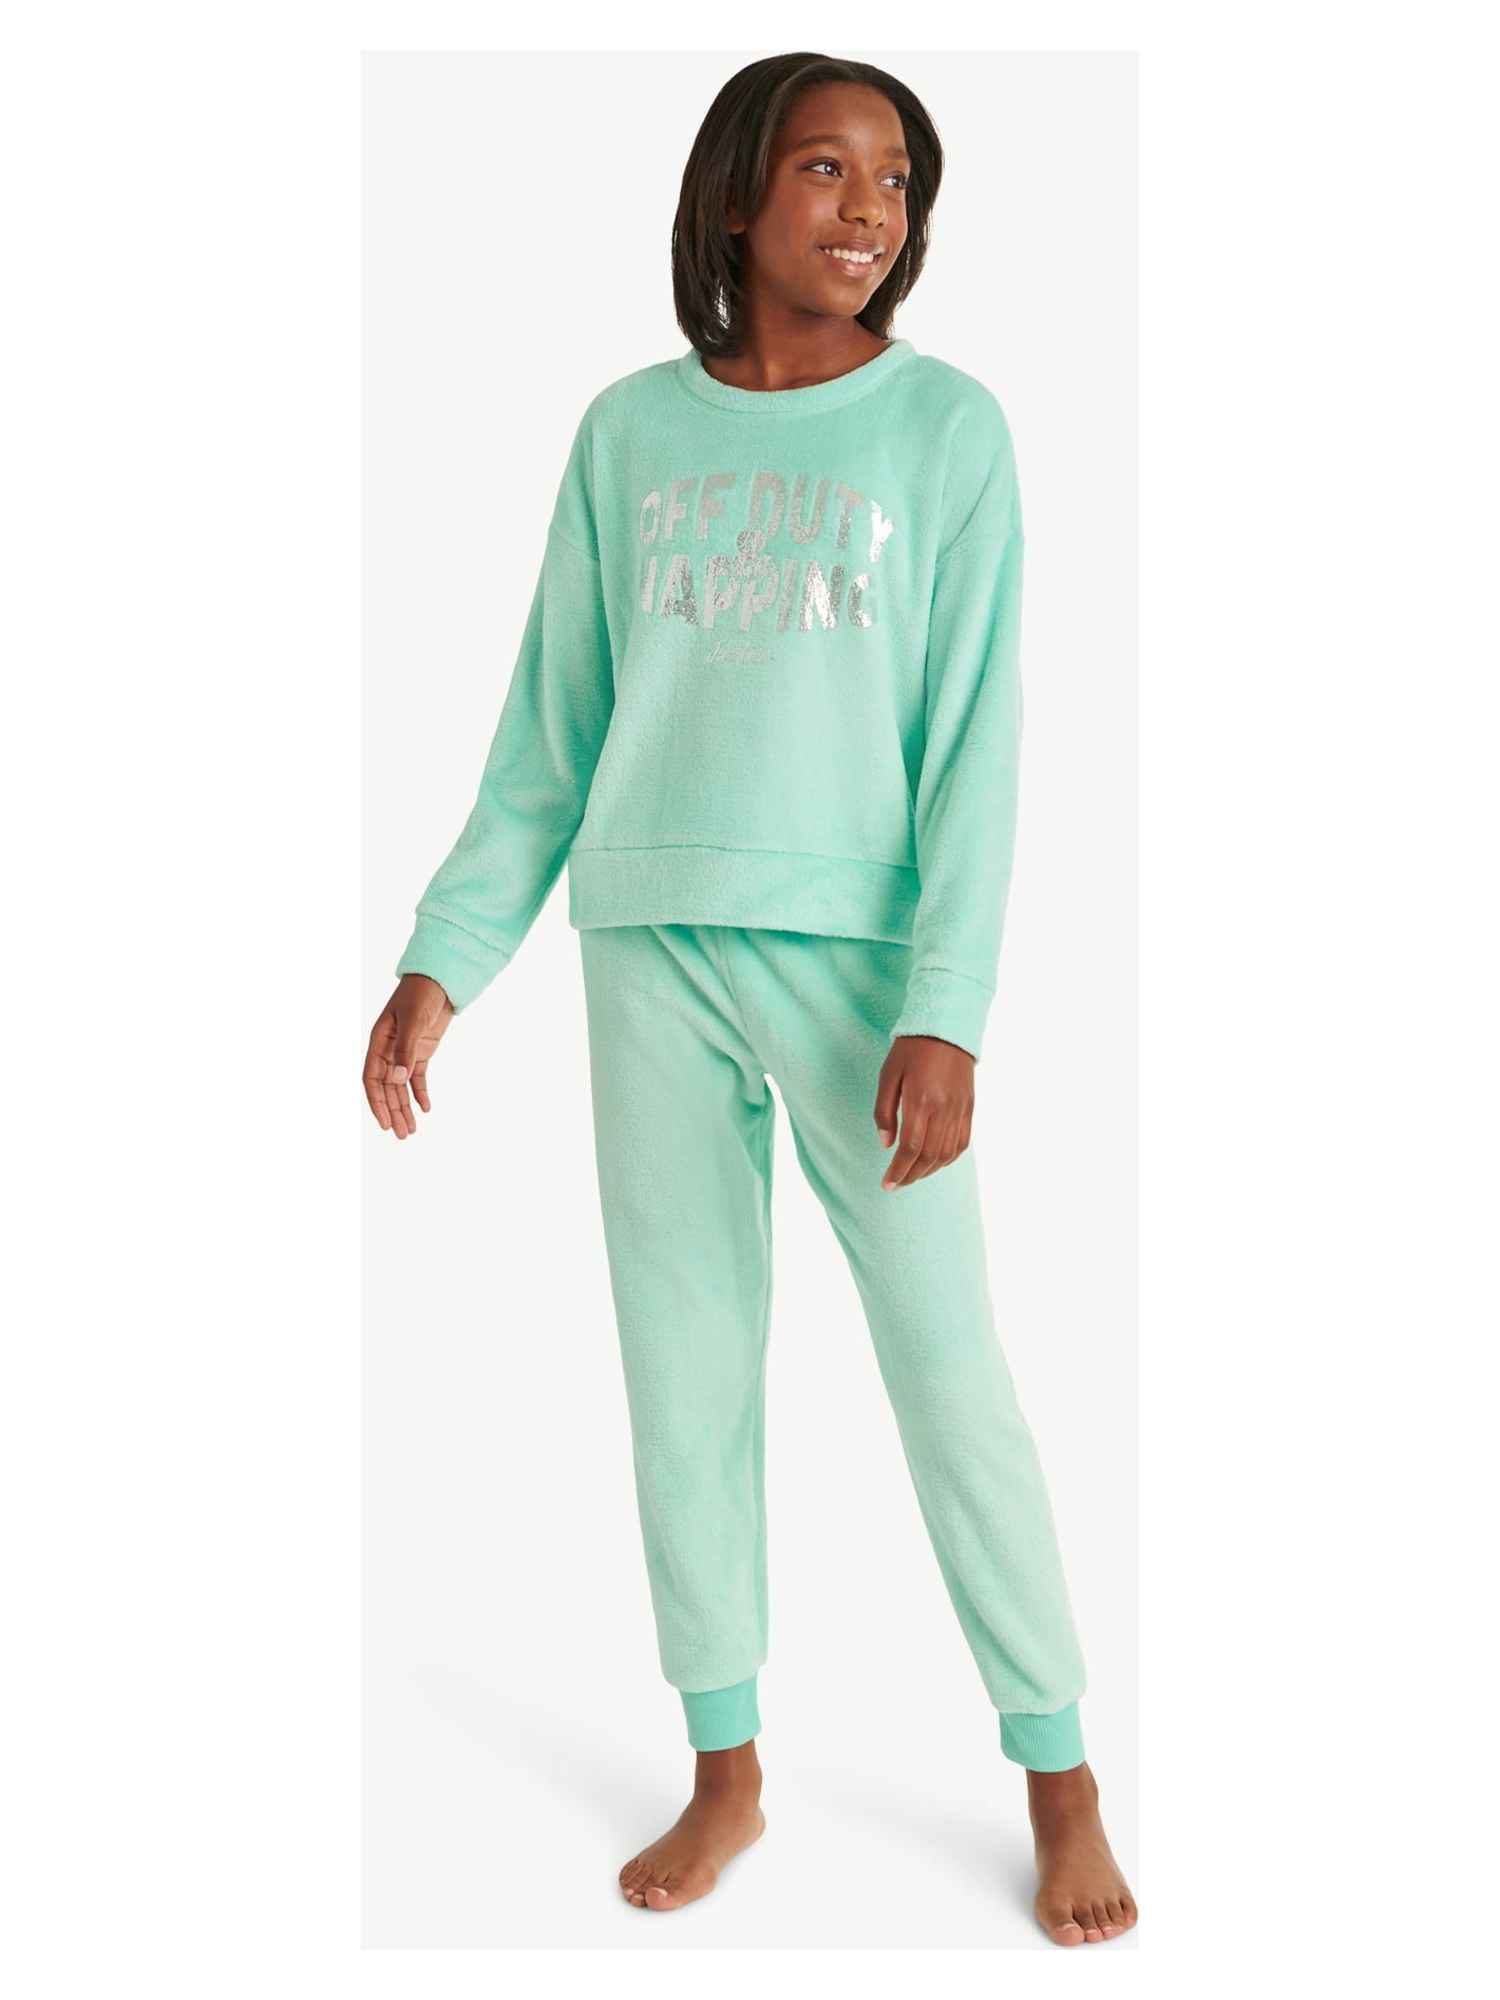 Justice Girls Fleece Long Sleeve Top and Jogger Pant, 2-piece Pajama Set,  Sizes 5-18 & Plus 